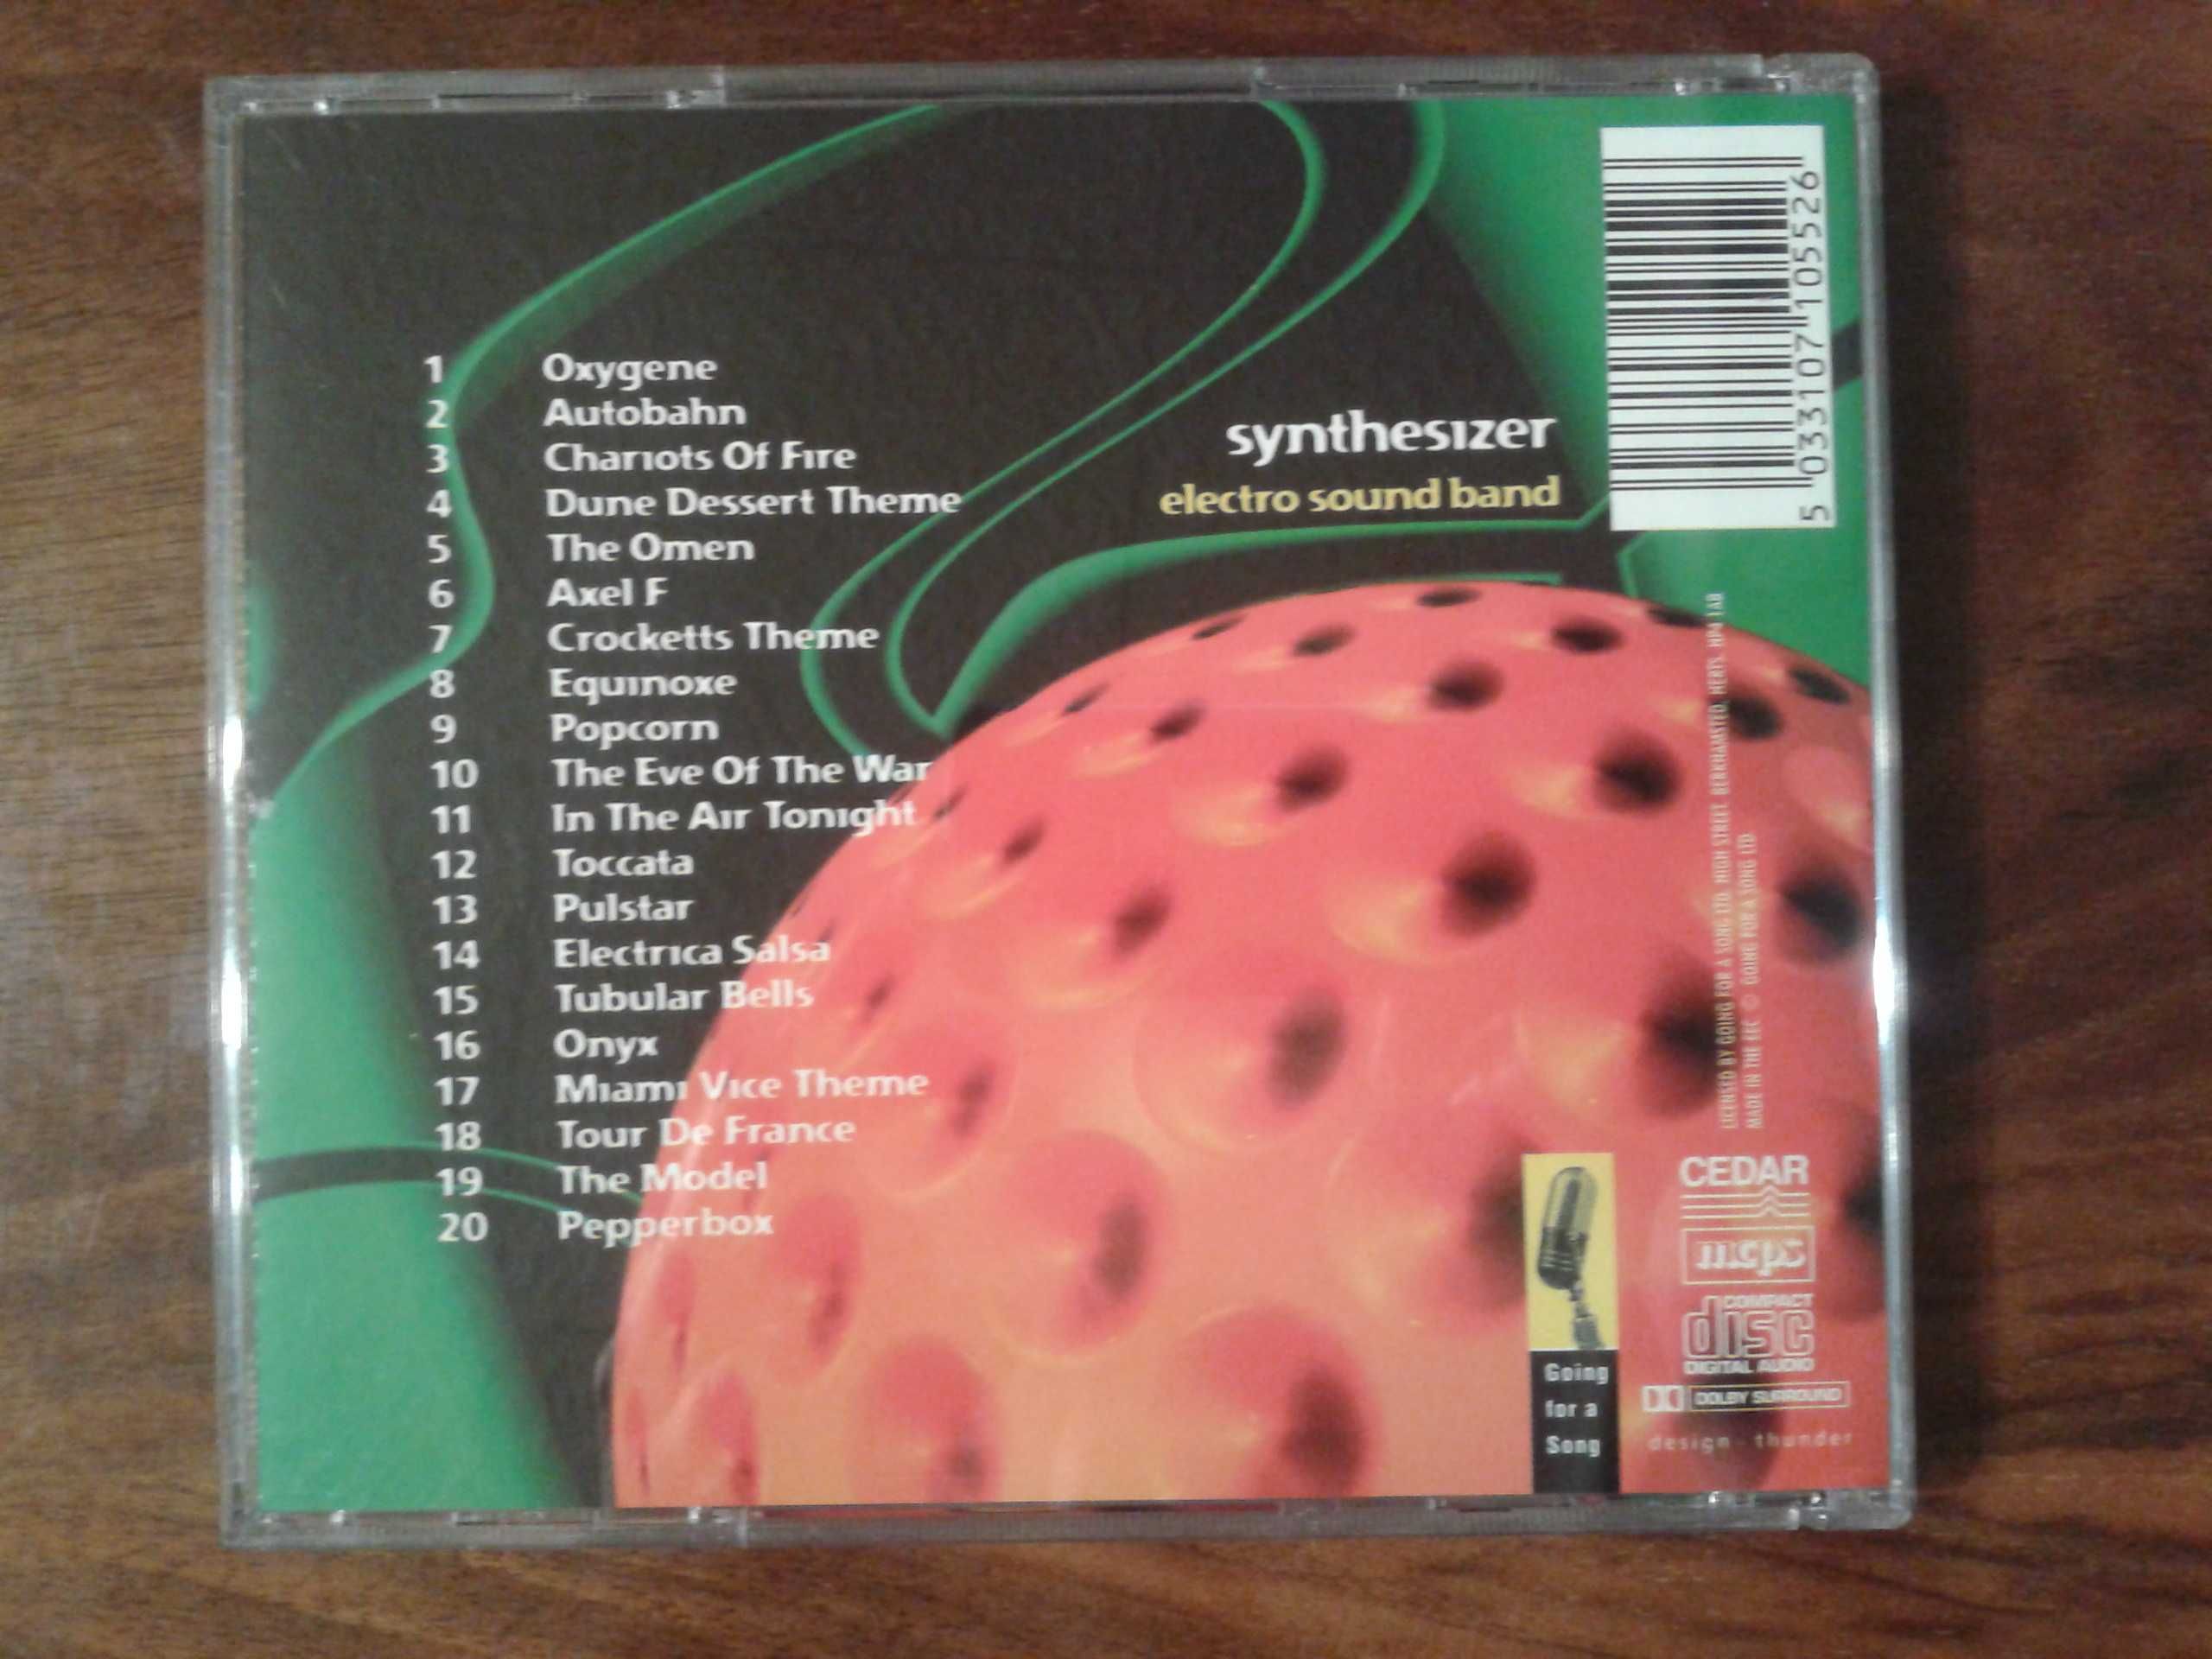 Płyta CD " Synthesizer" Electro Sound Band